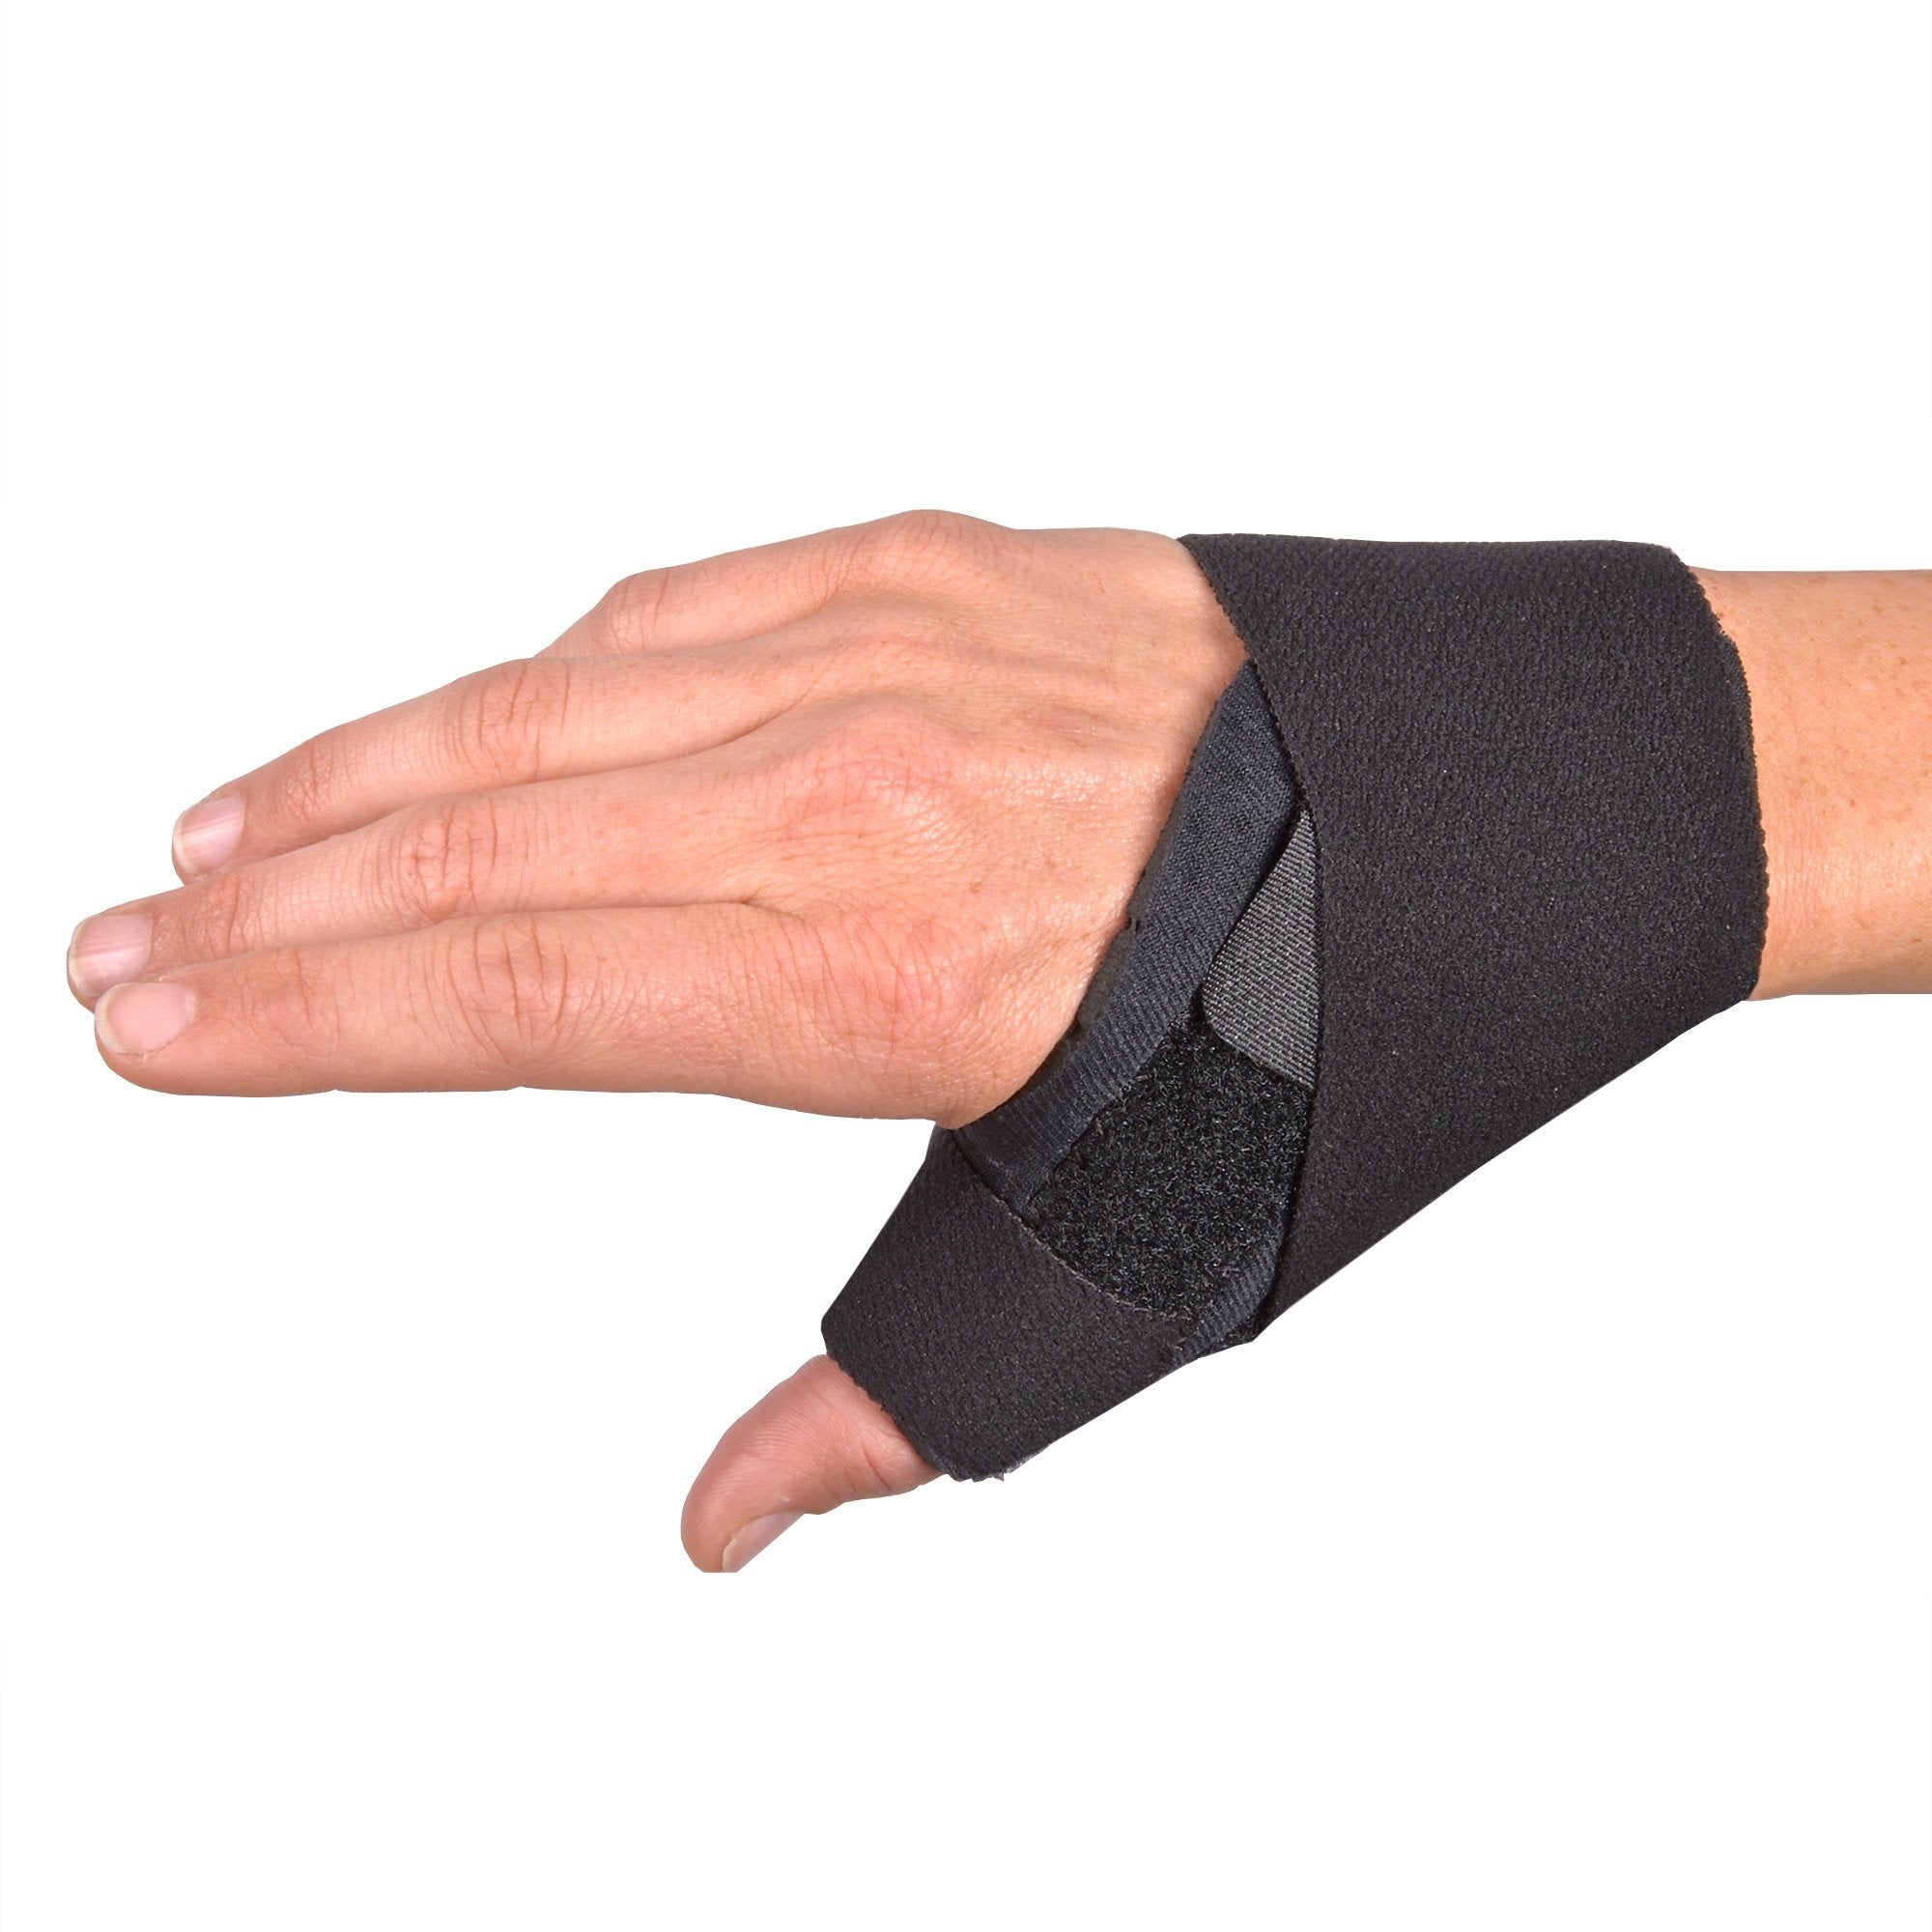 Thumb Splint Santa Barbara One Size Fits Most Circumferential Strap Right Hand (1 Unit)